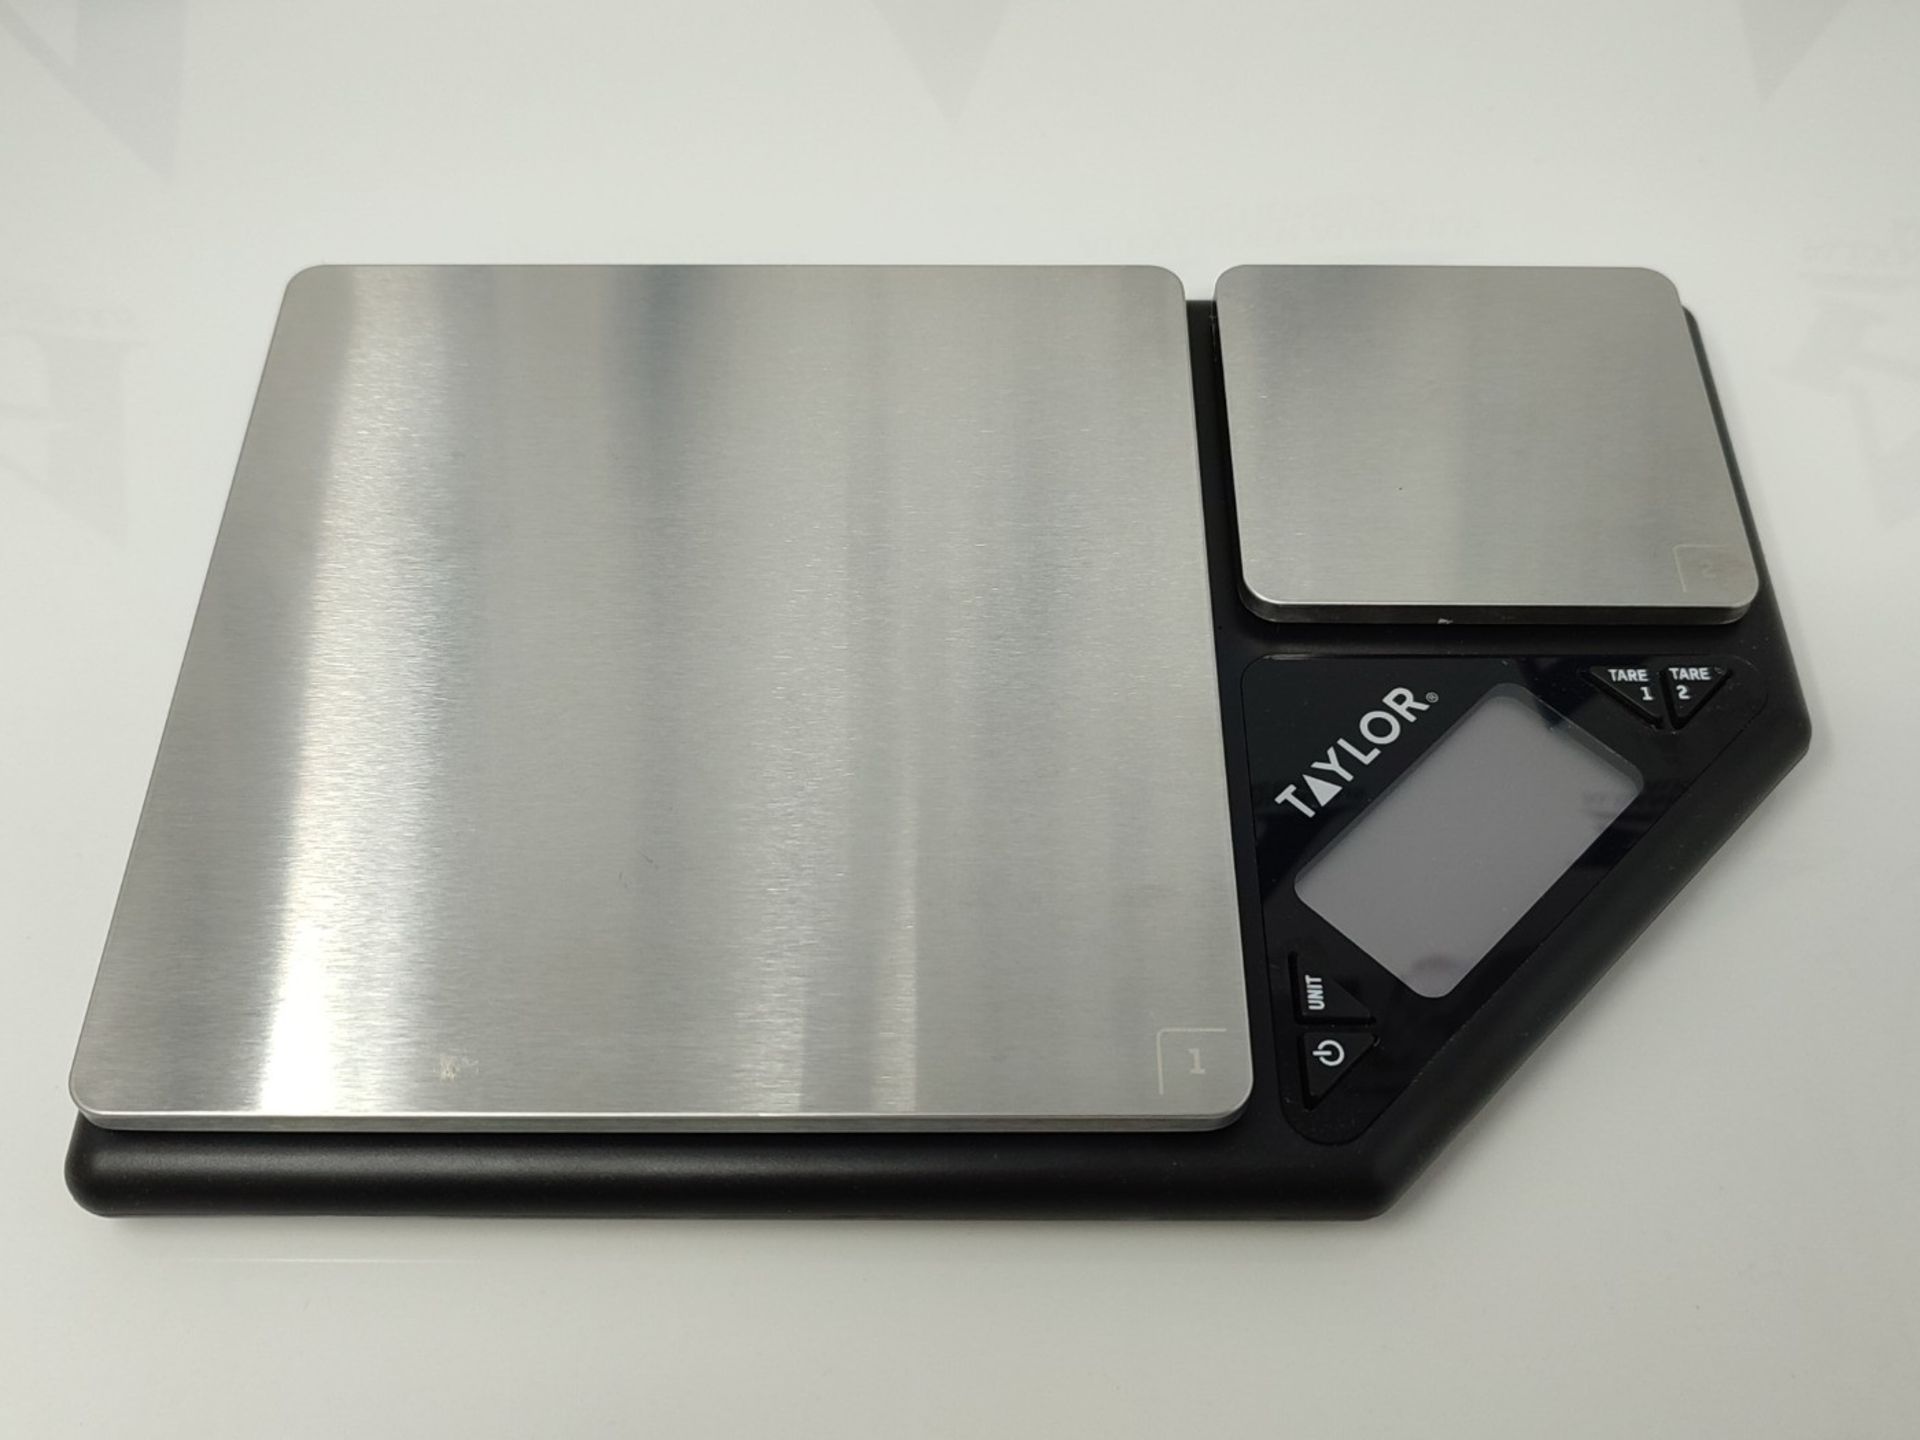 Taylor Pro Digital Kitchen Food Scales with Dual Platform Weighing Design, Professiona - Bild 2 aus 2